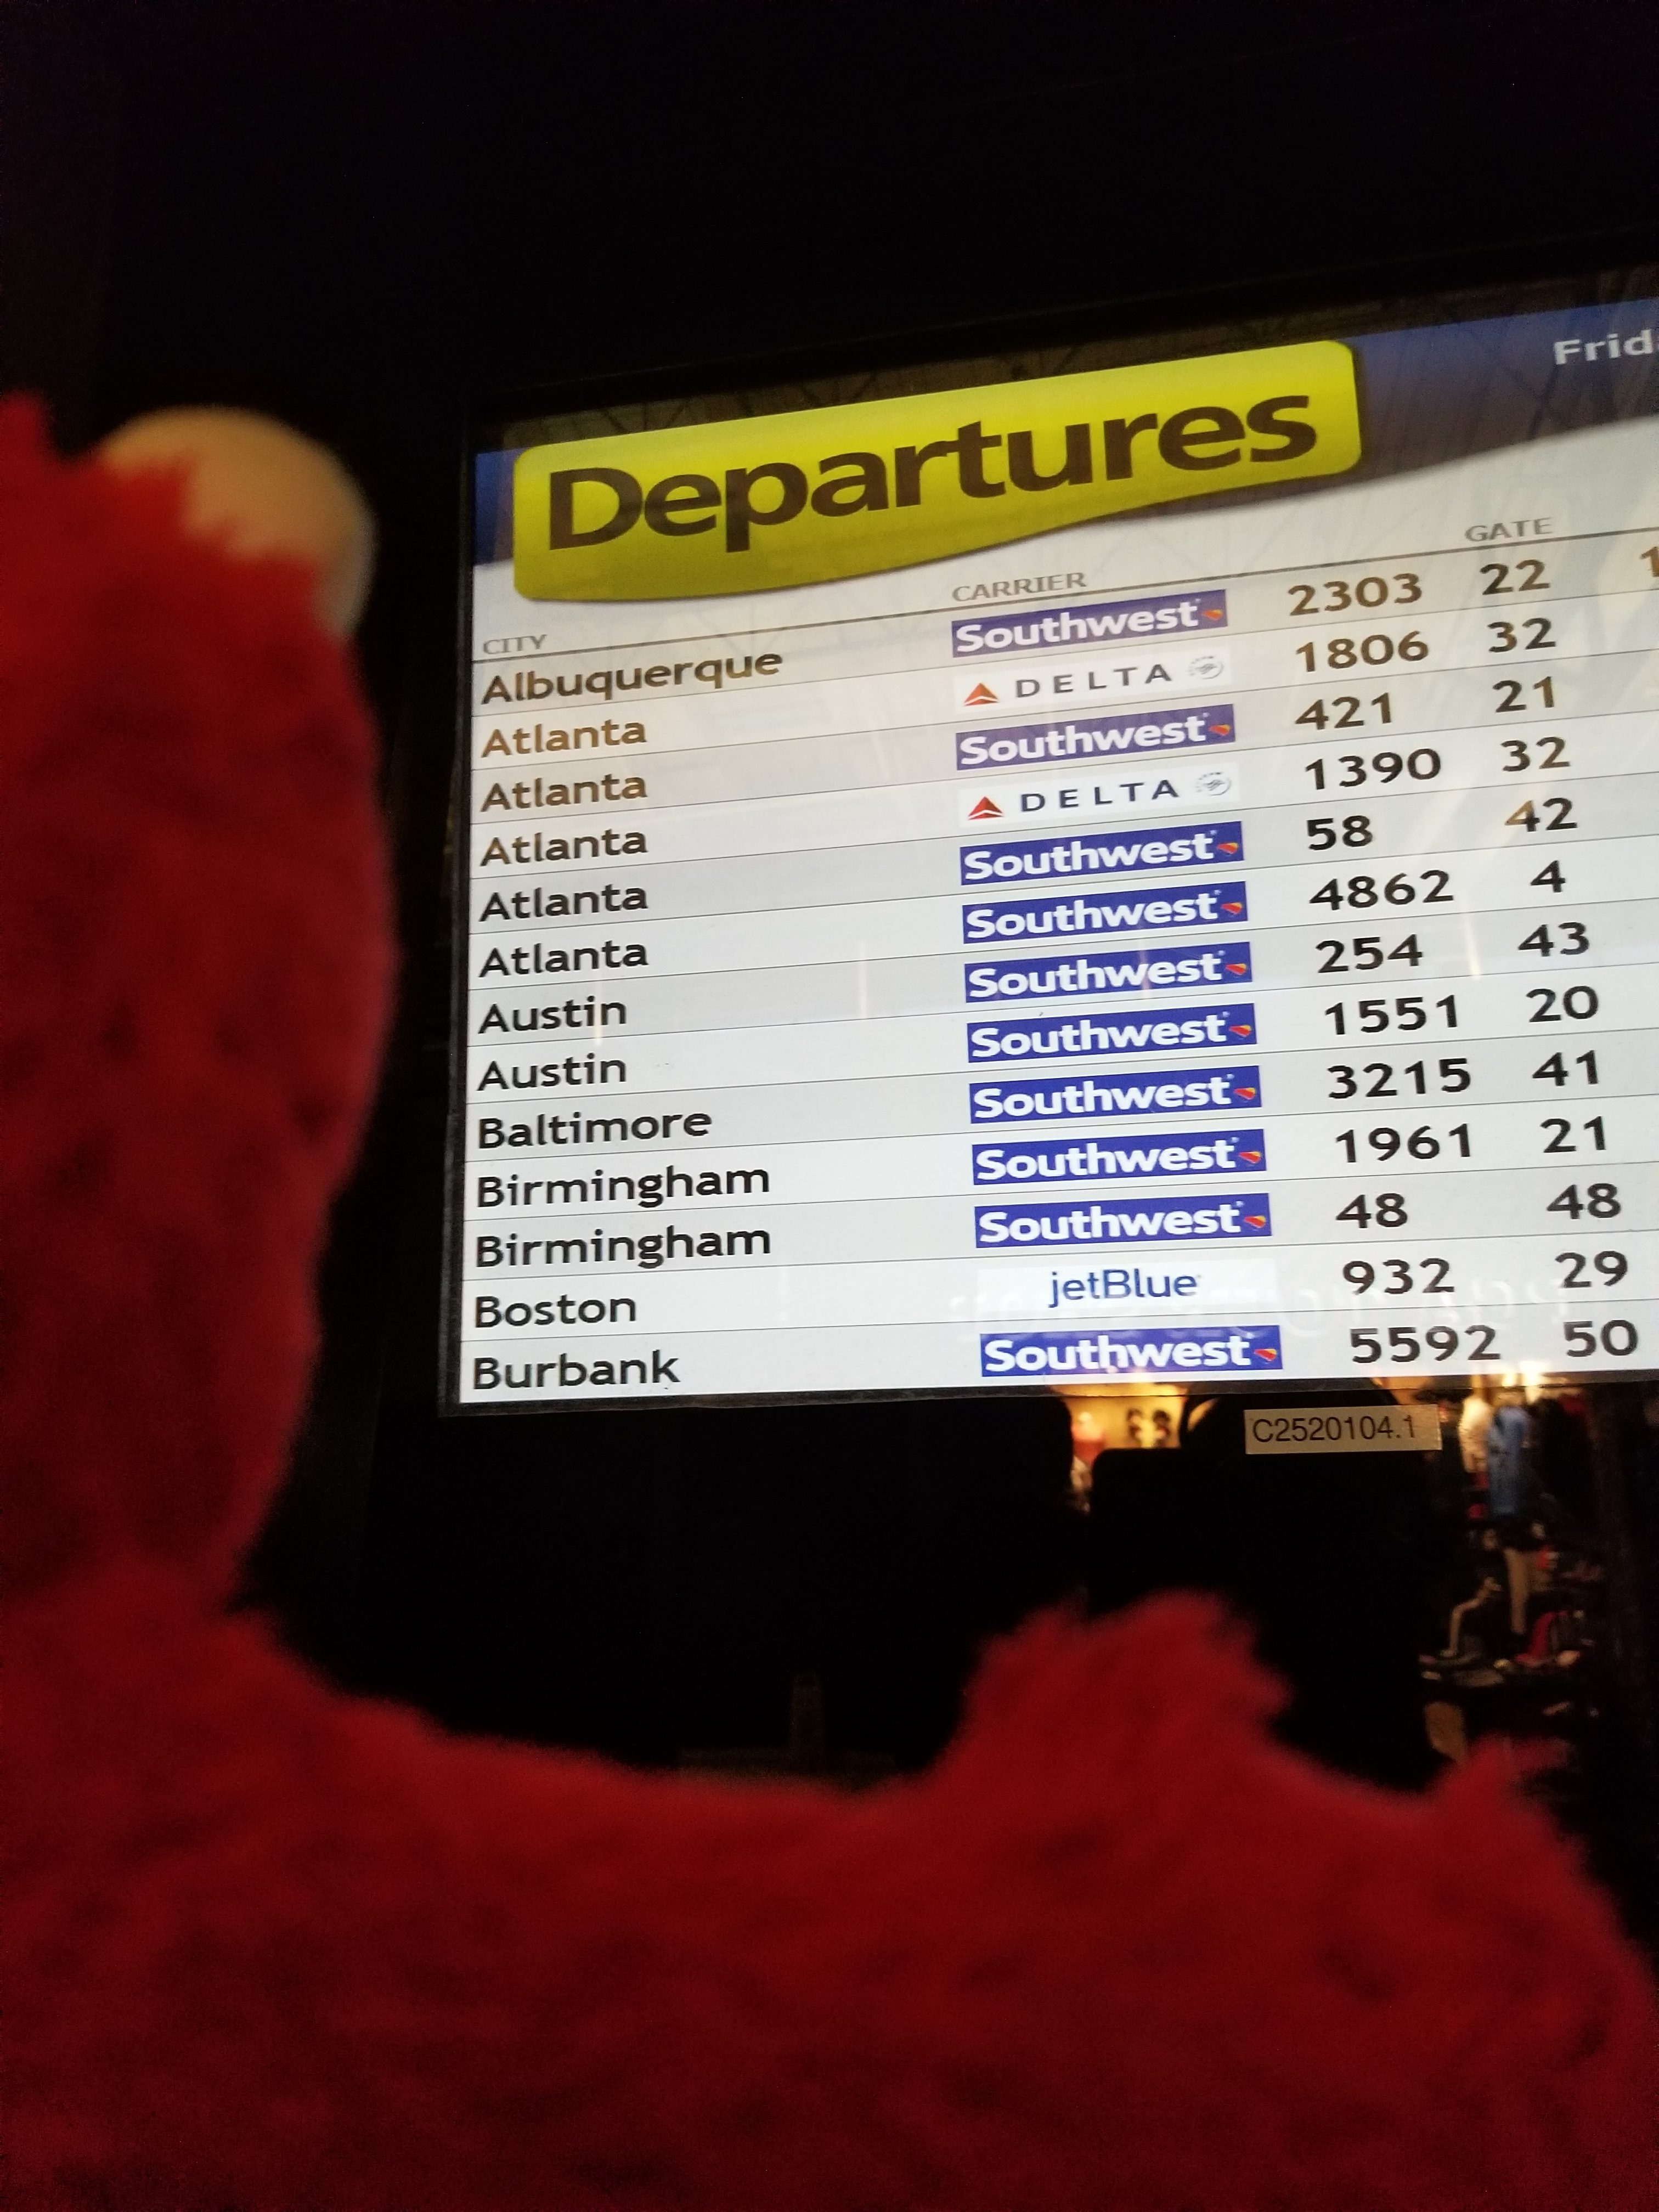 Elmo checks his flight status